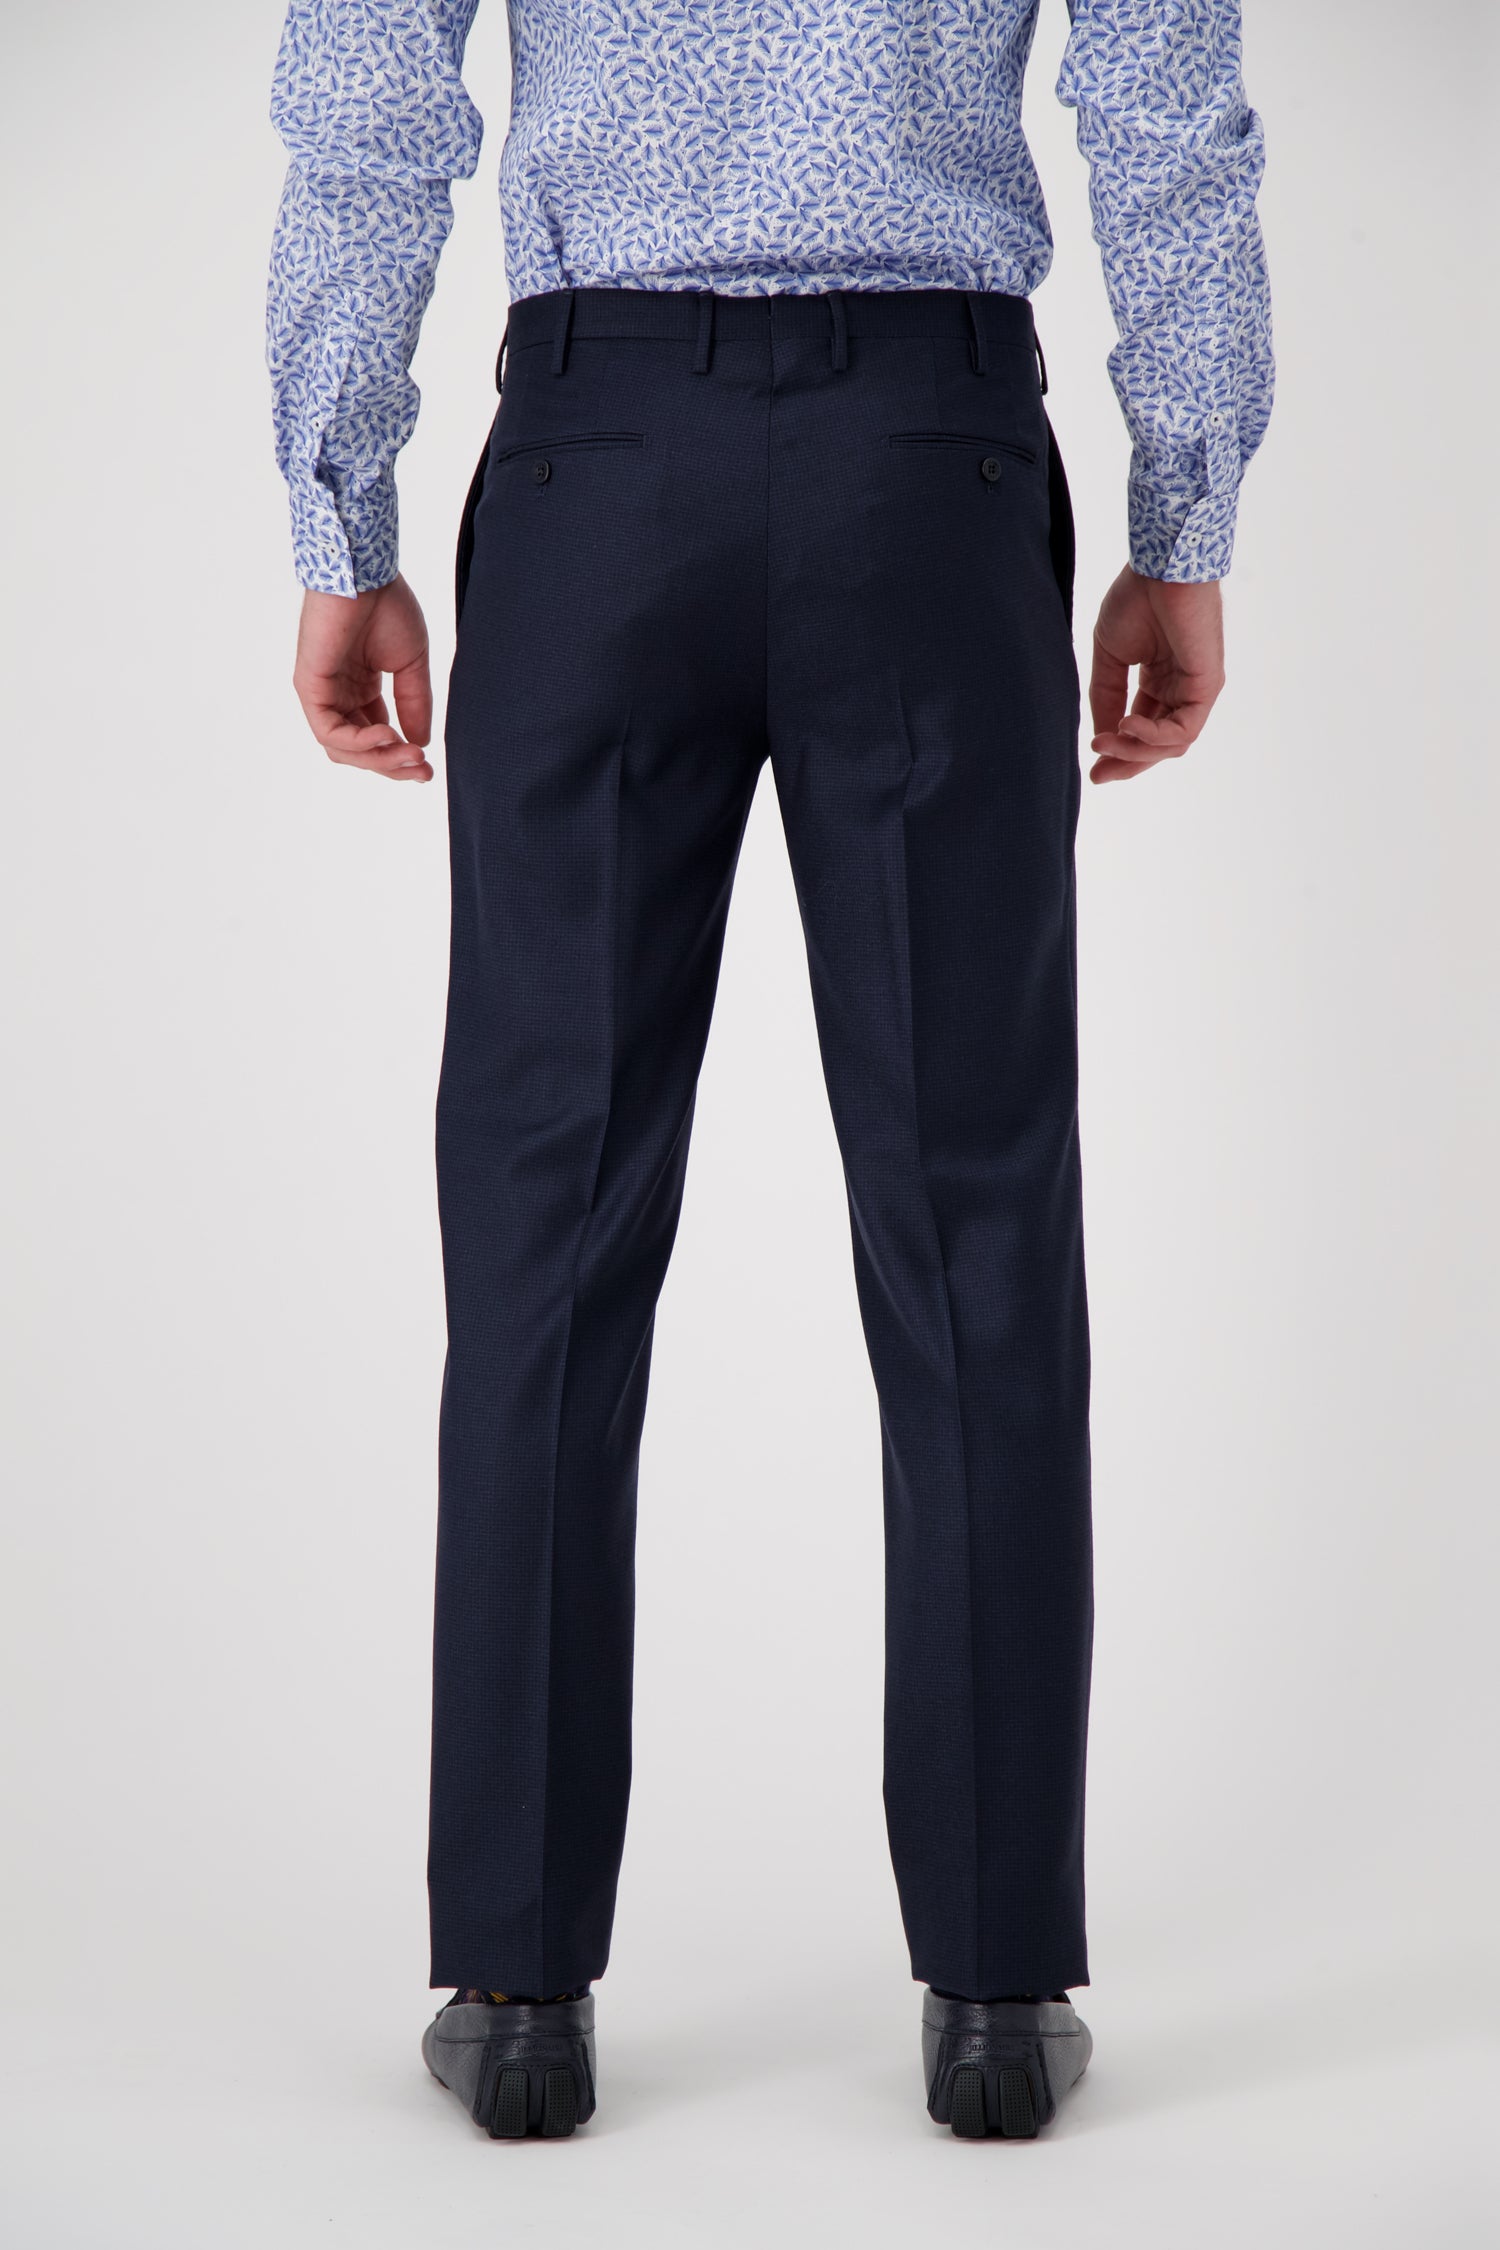 Incotex Navy Pattern Trousers